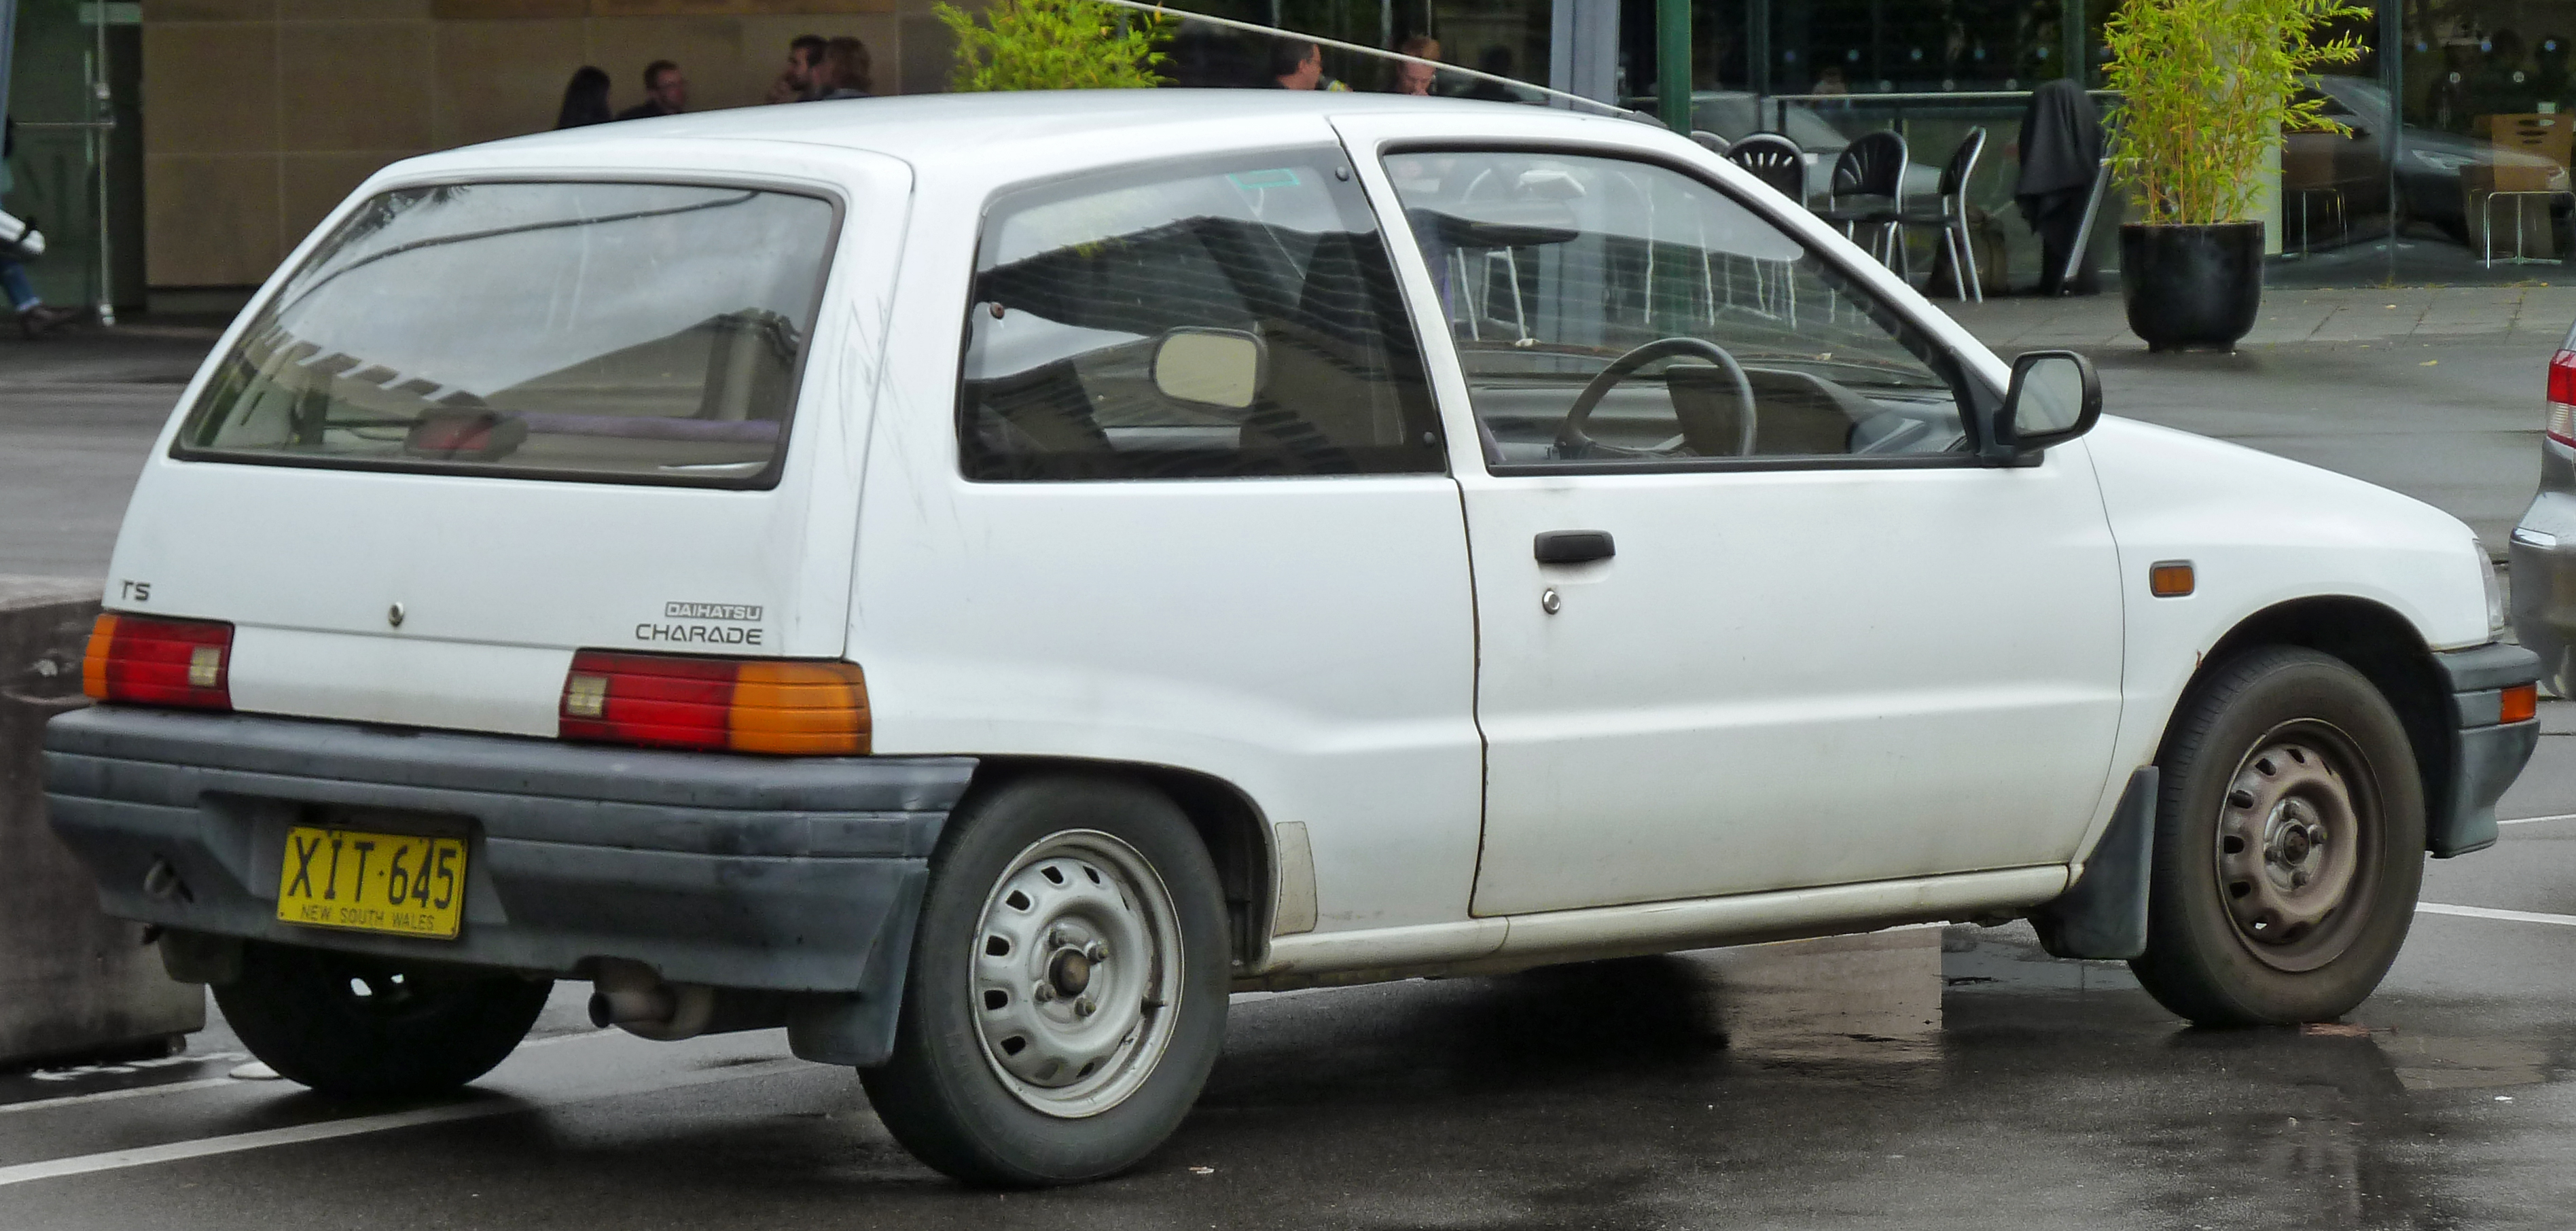 Daihatsu Charade Exterior Side View